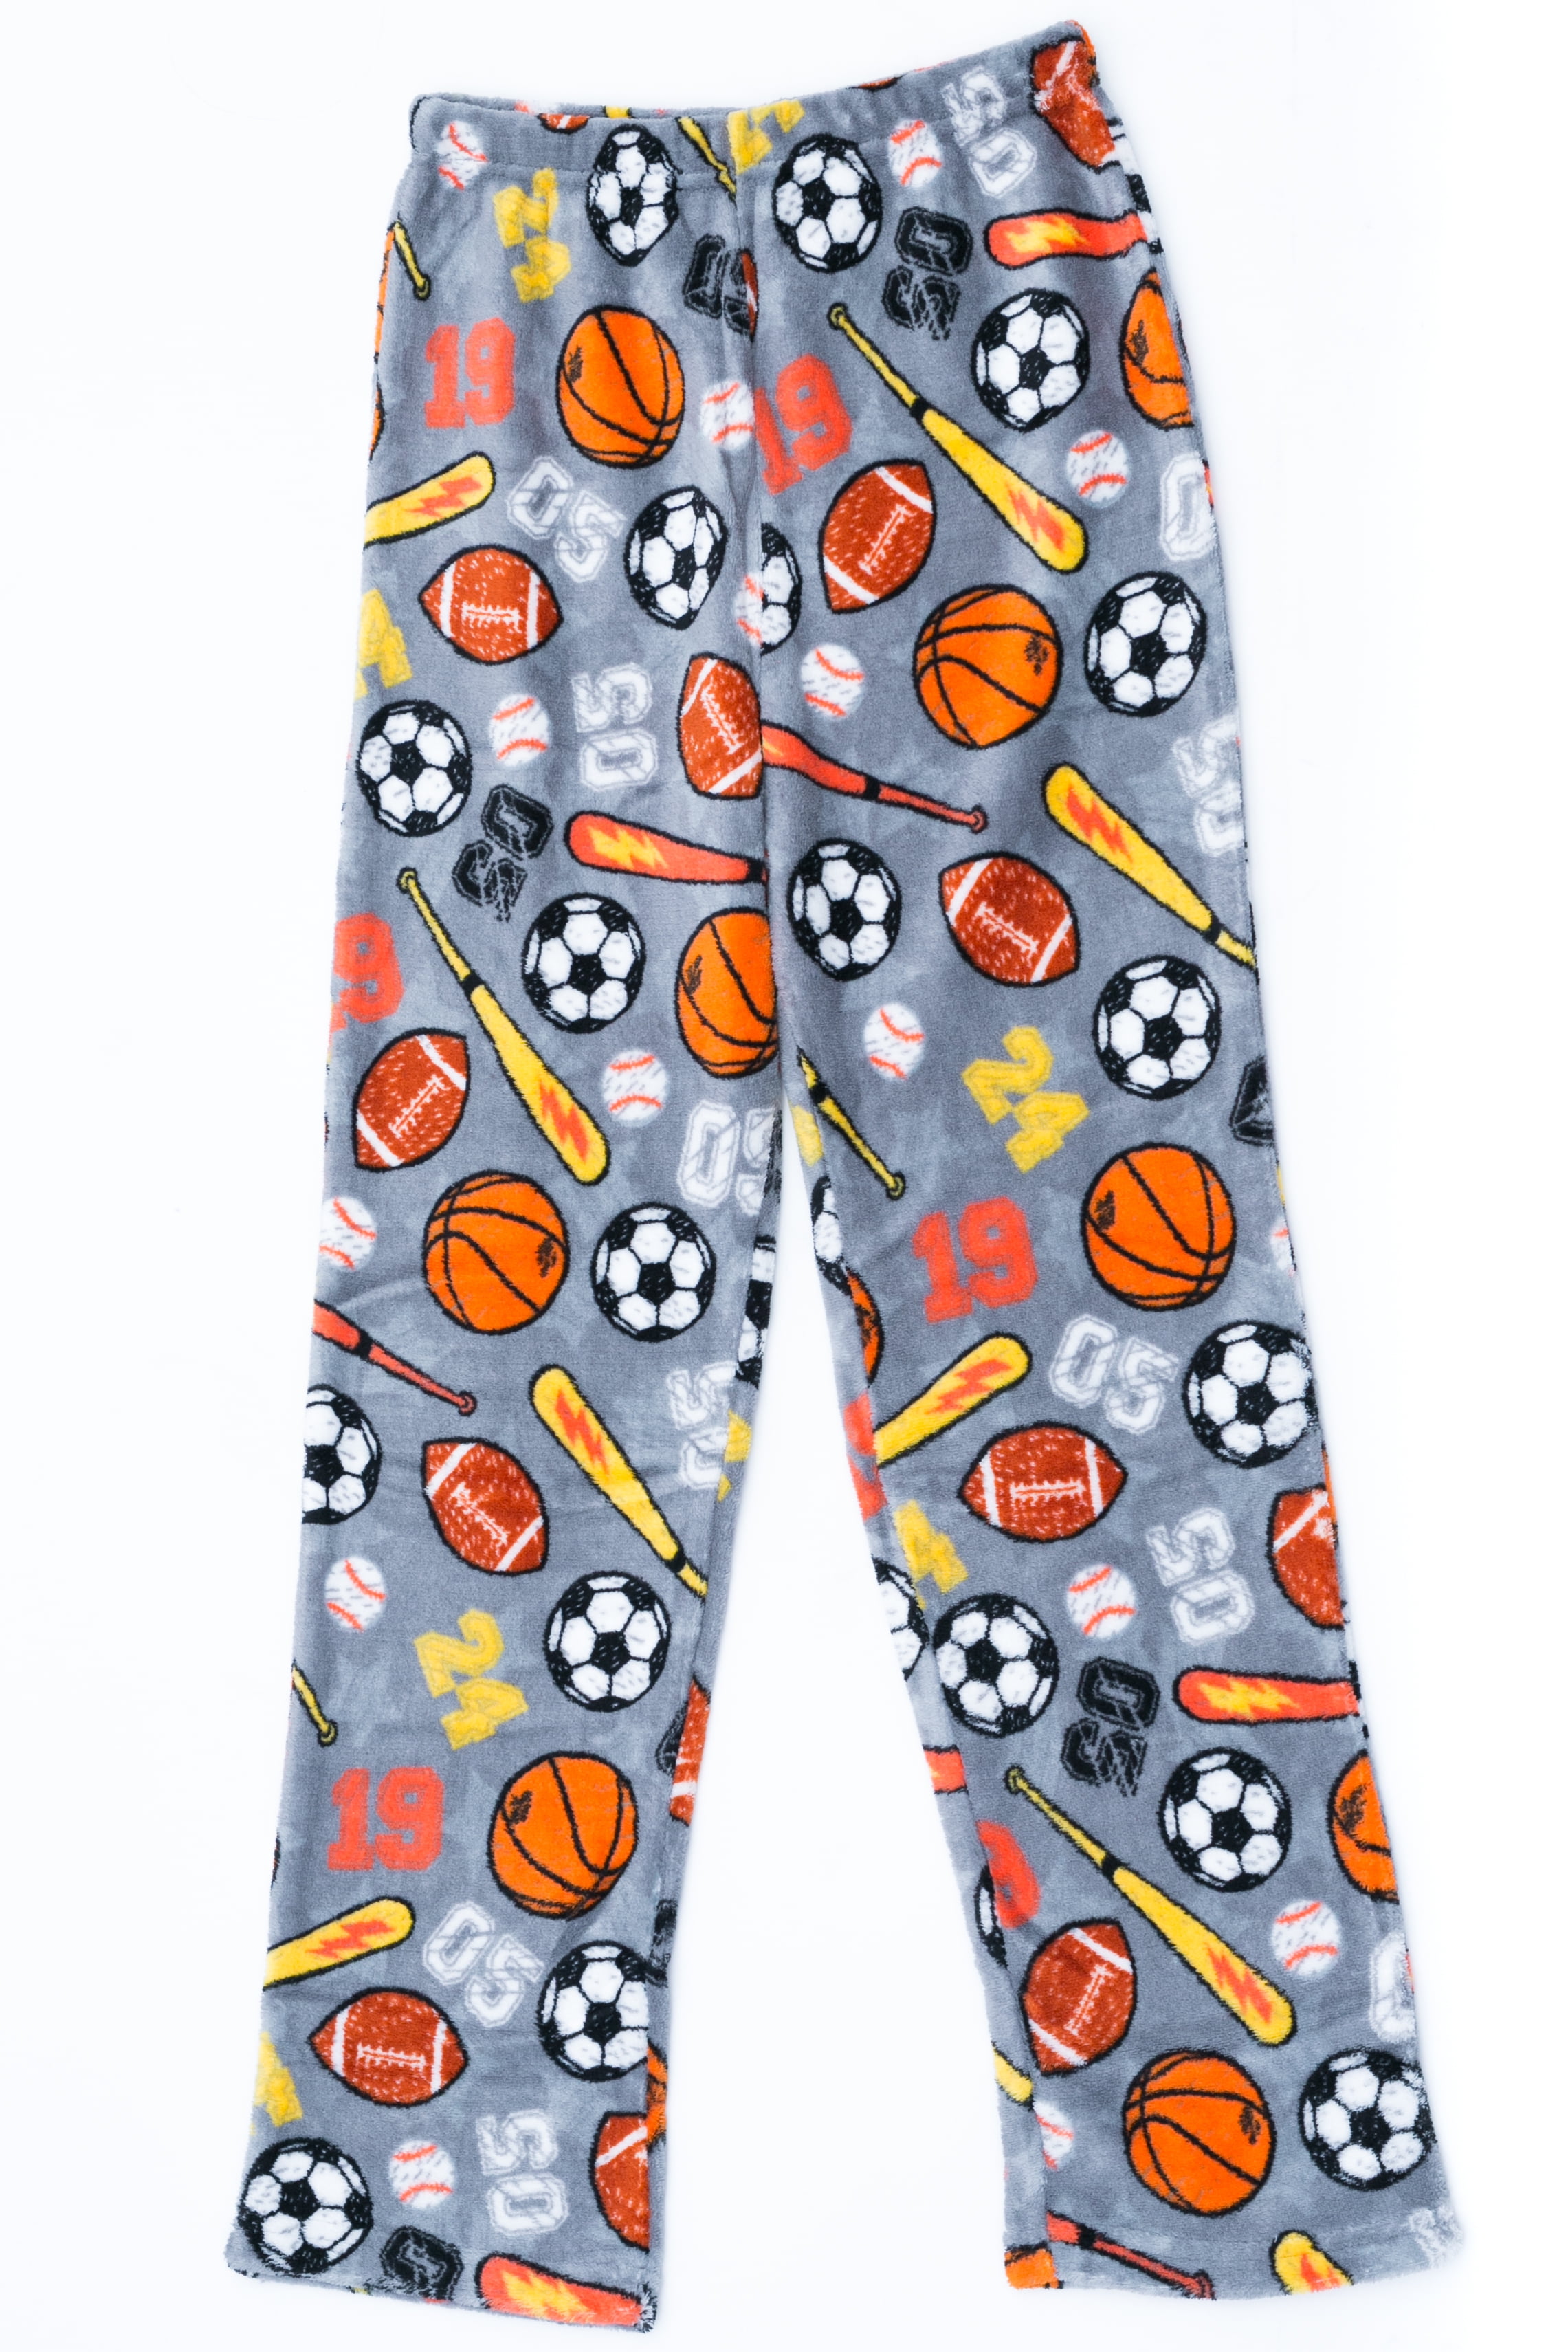 Prince of Sleep Boys' Plush Fleece Pajama Pants - Warm and Cozy Sleepwear  (Grey - Sports, Boys 7)